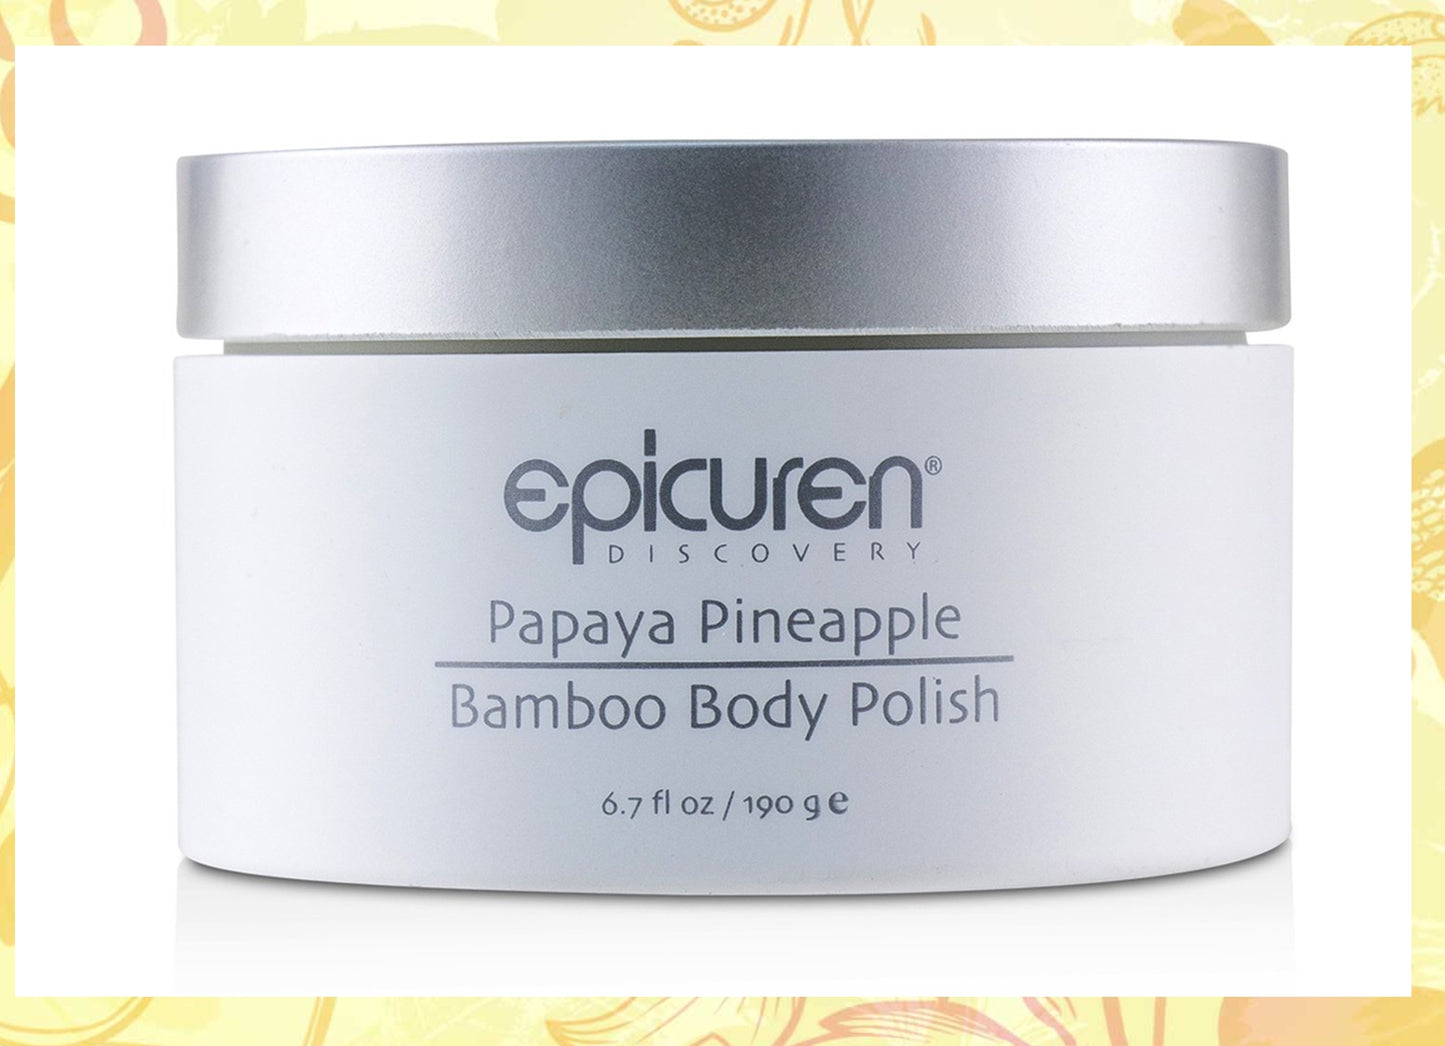 Epicuren Papaya Pineapple Bamboo Body Polish and Scrub, 6.7 oz